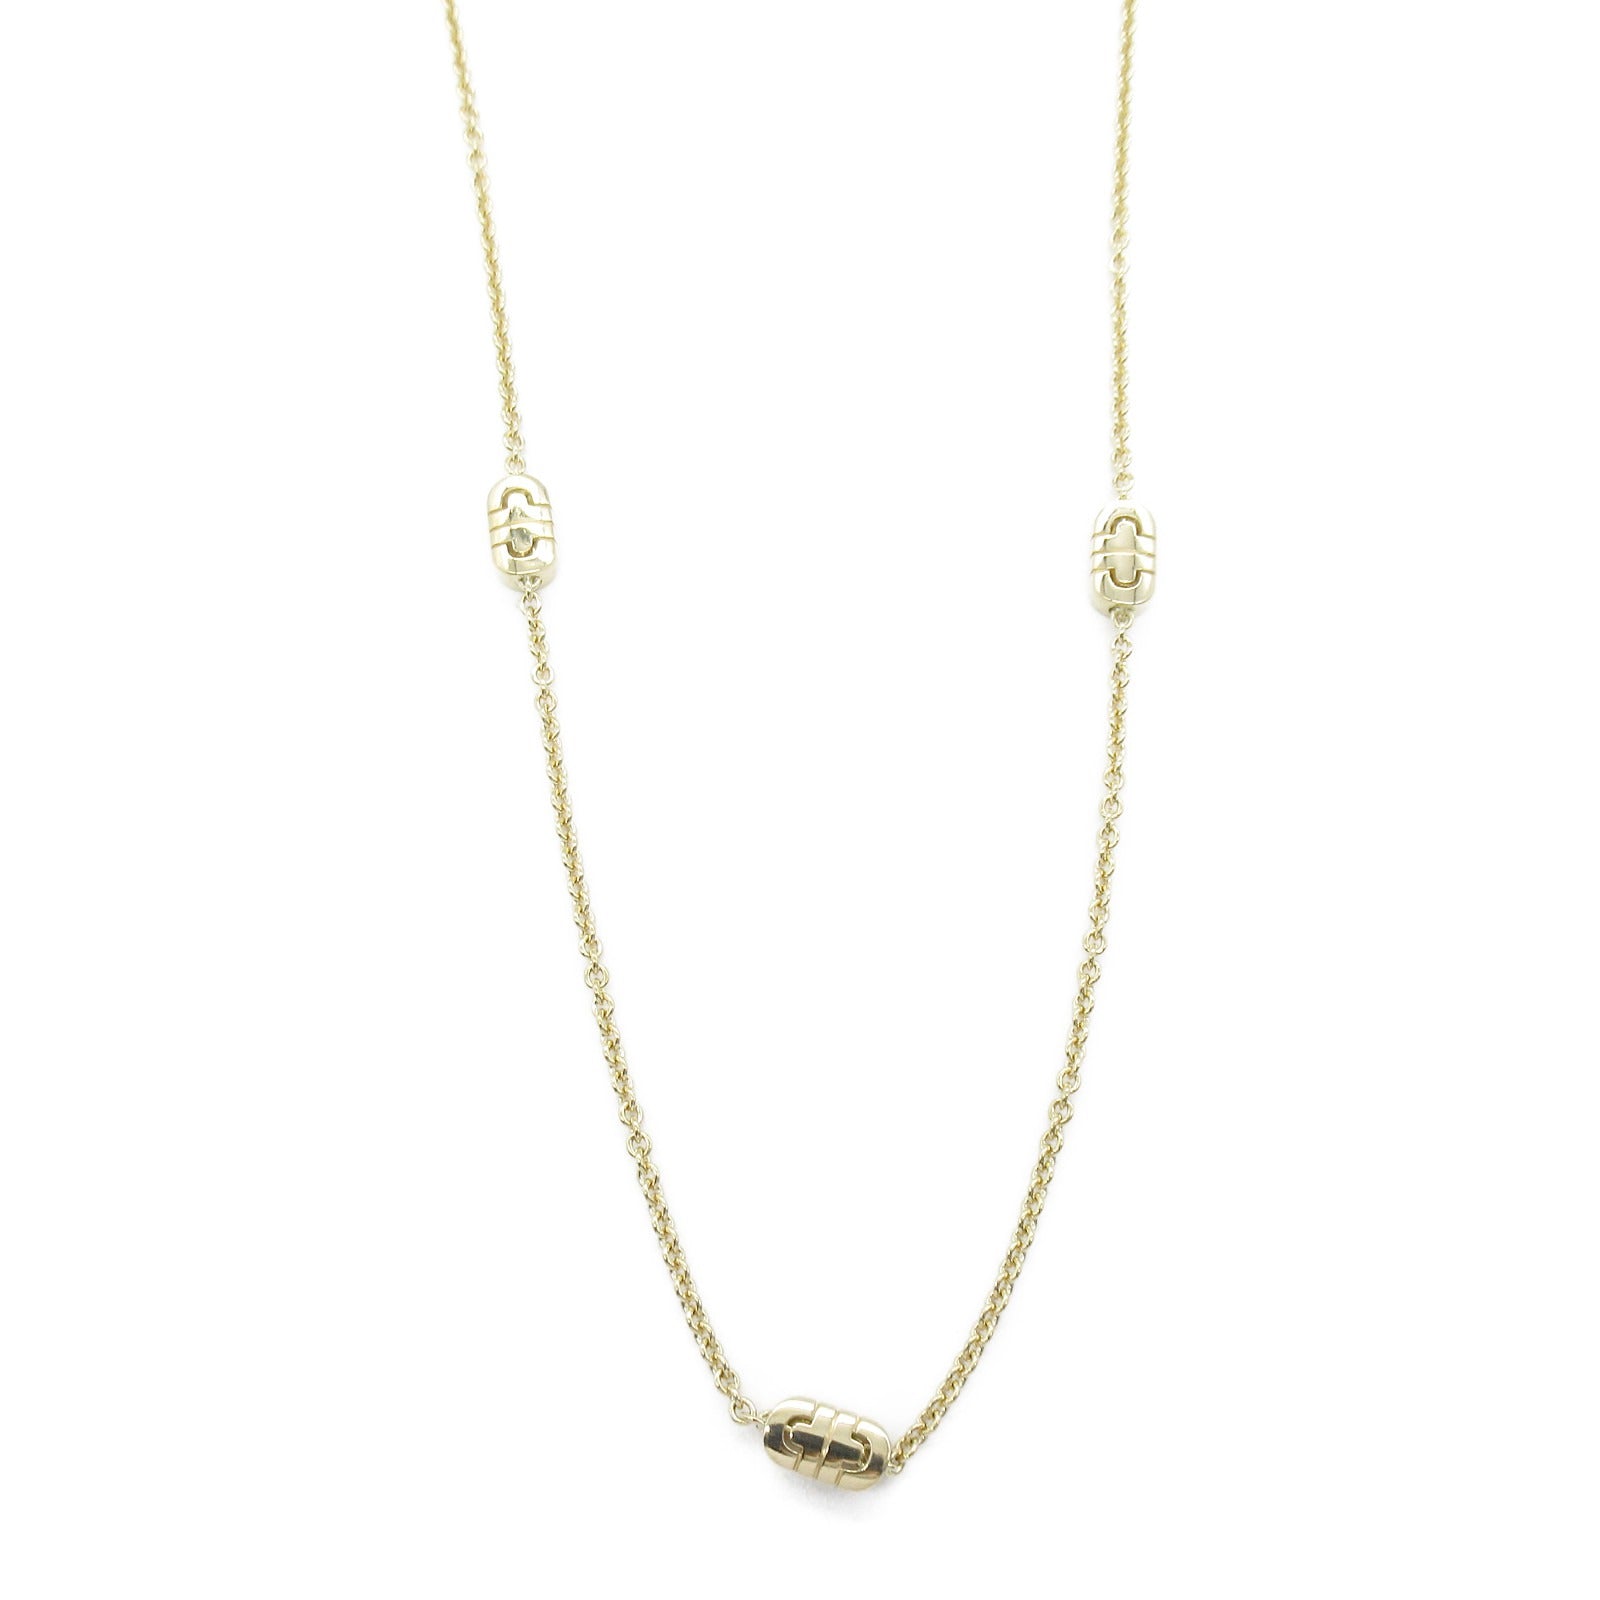 Bulgari BVLGARI Palentine necklace necklace jewelry K18 (yellow g)  Gold